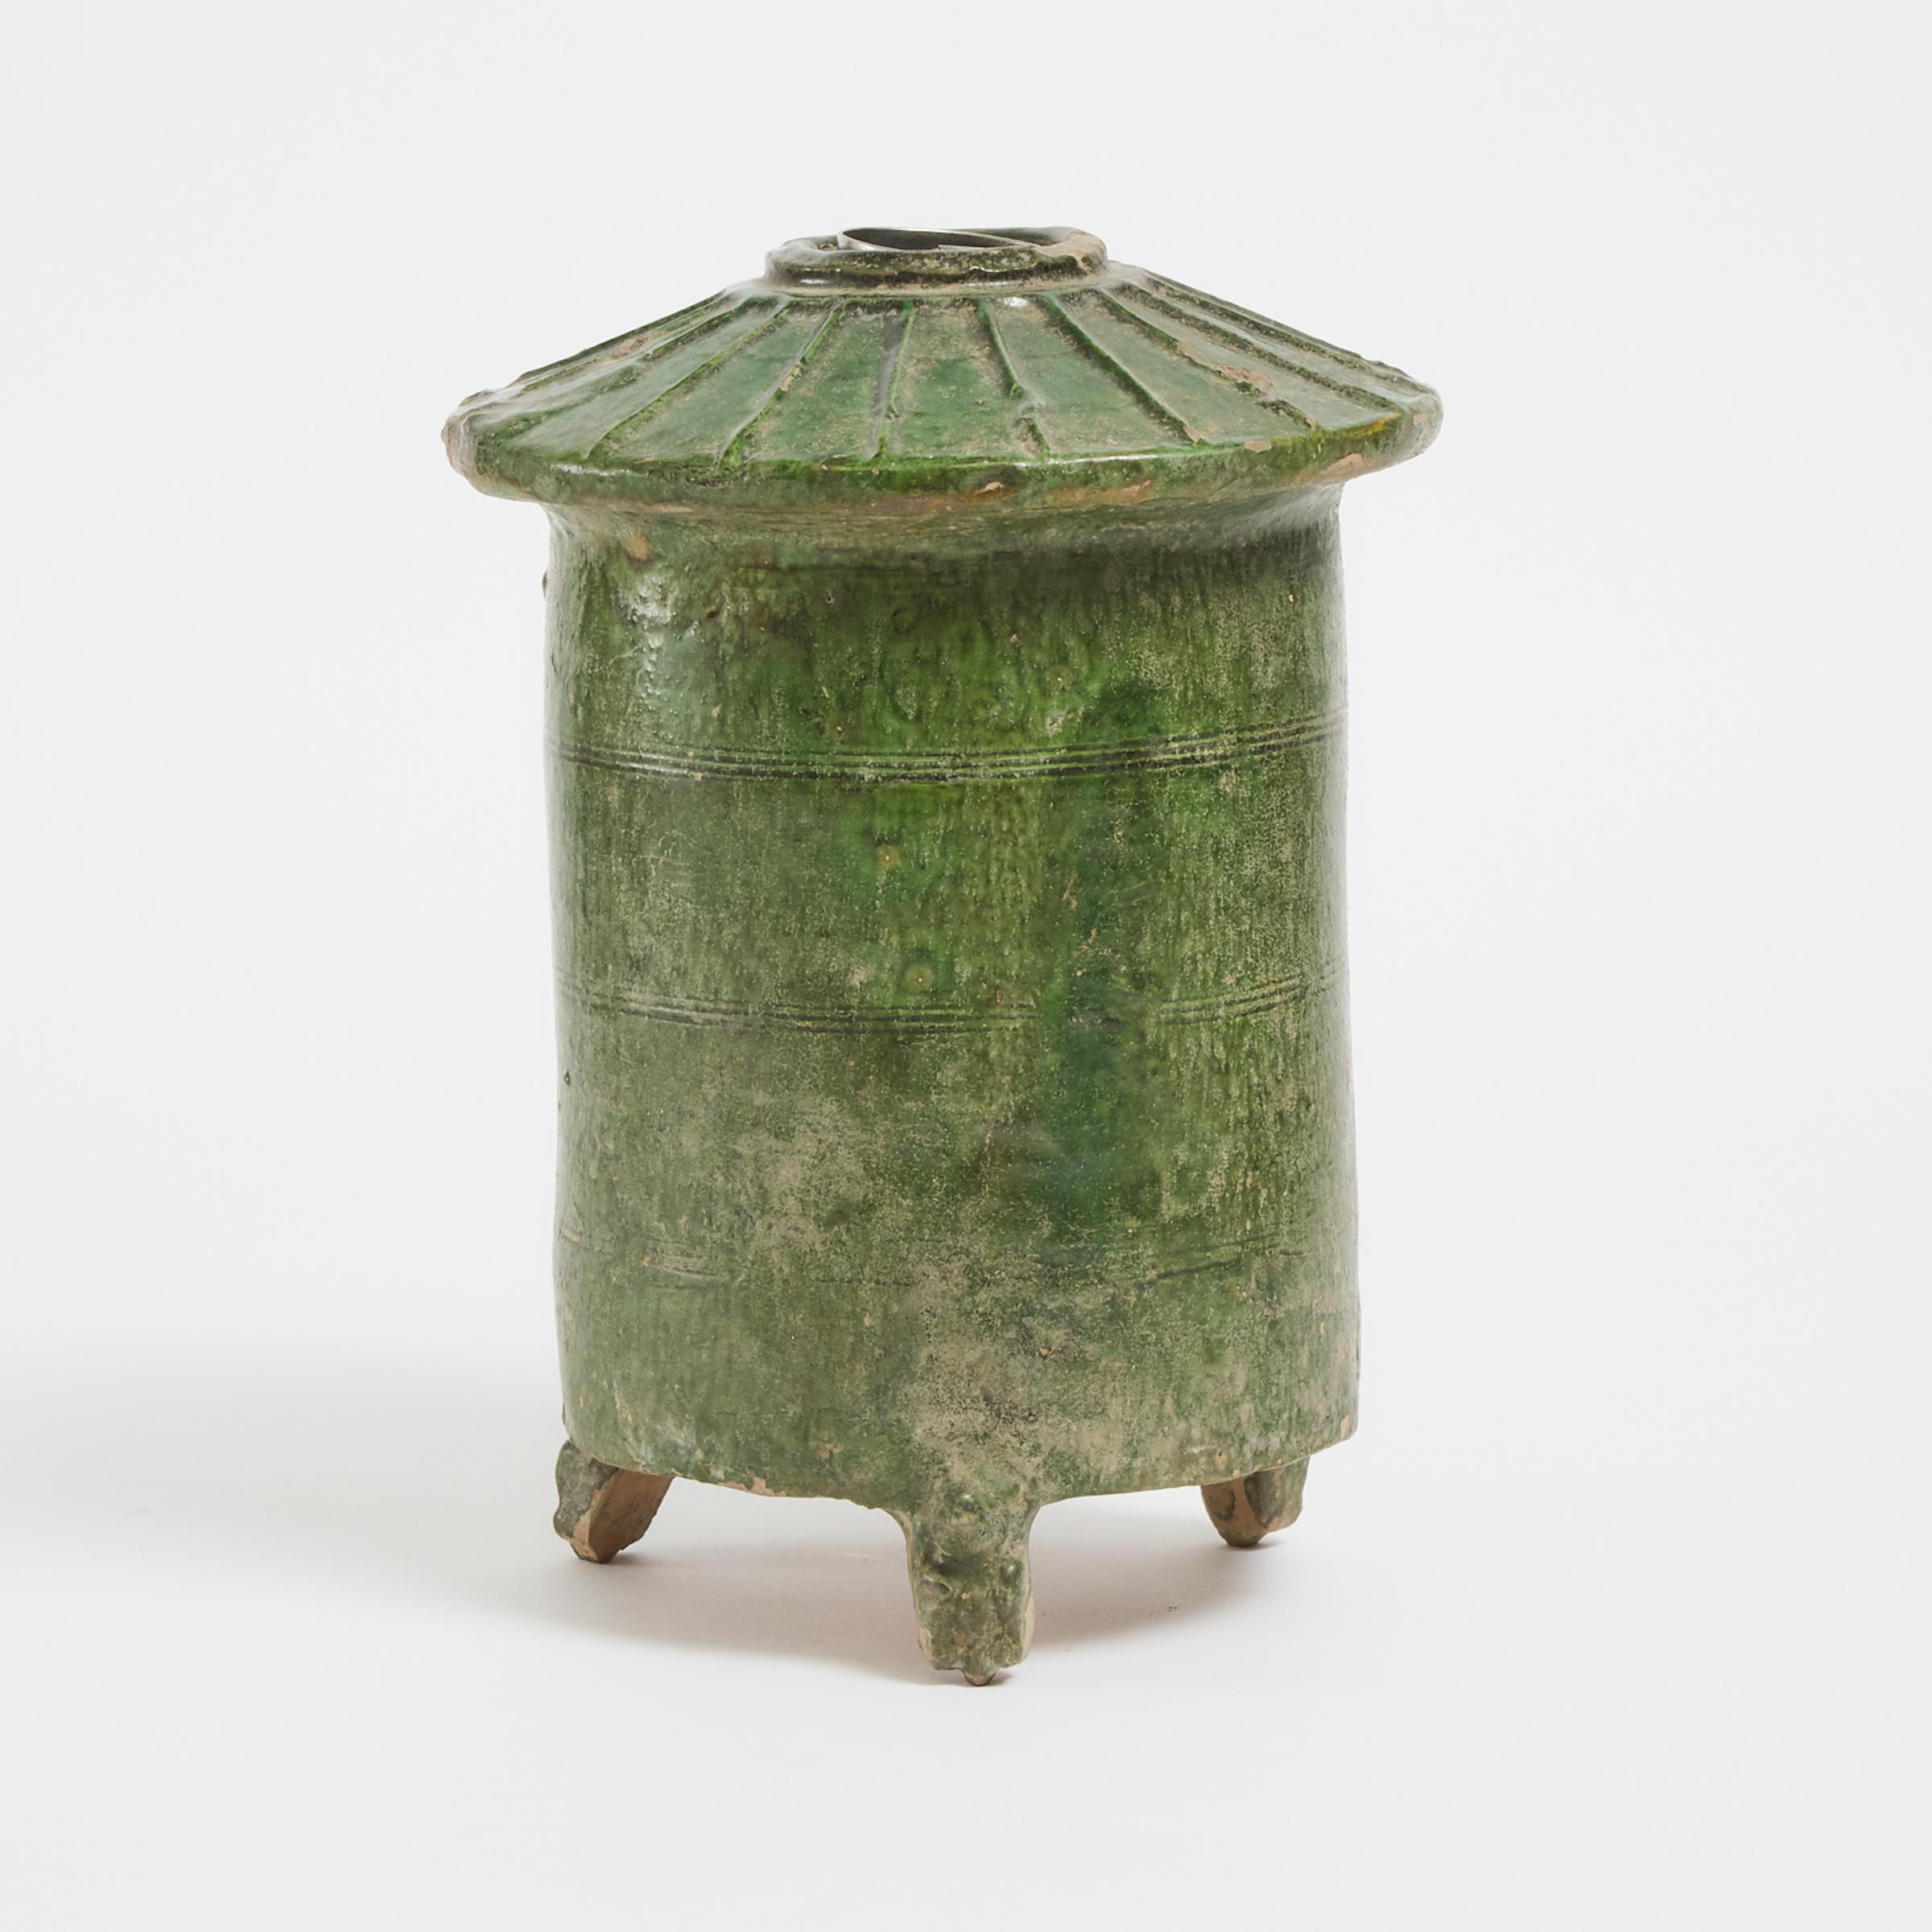 A Green-Glazed Pottery Model of a Granary, Han Dynasty (206 BC-220 AD)